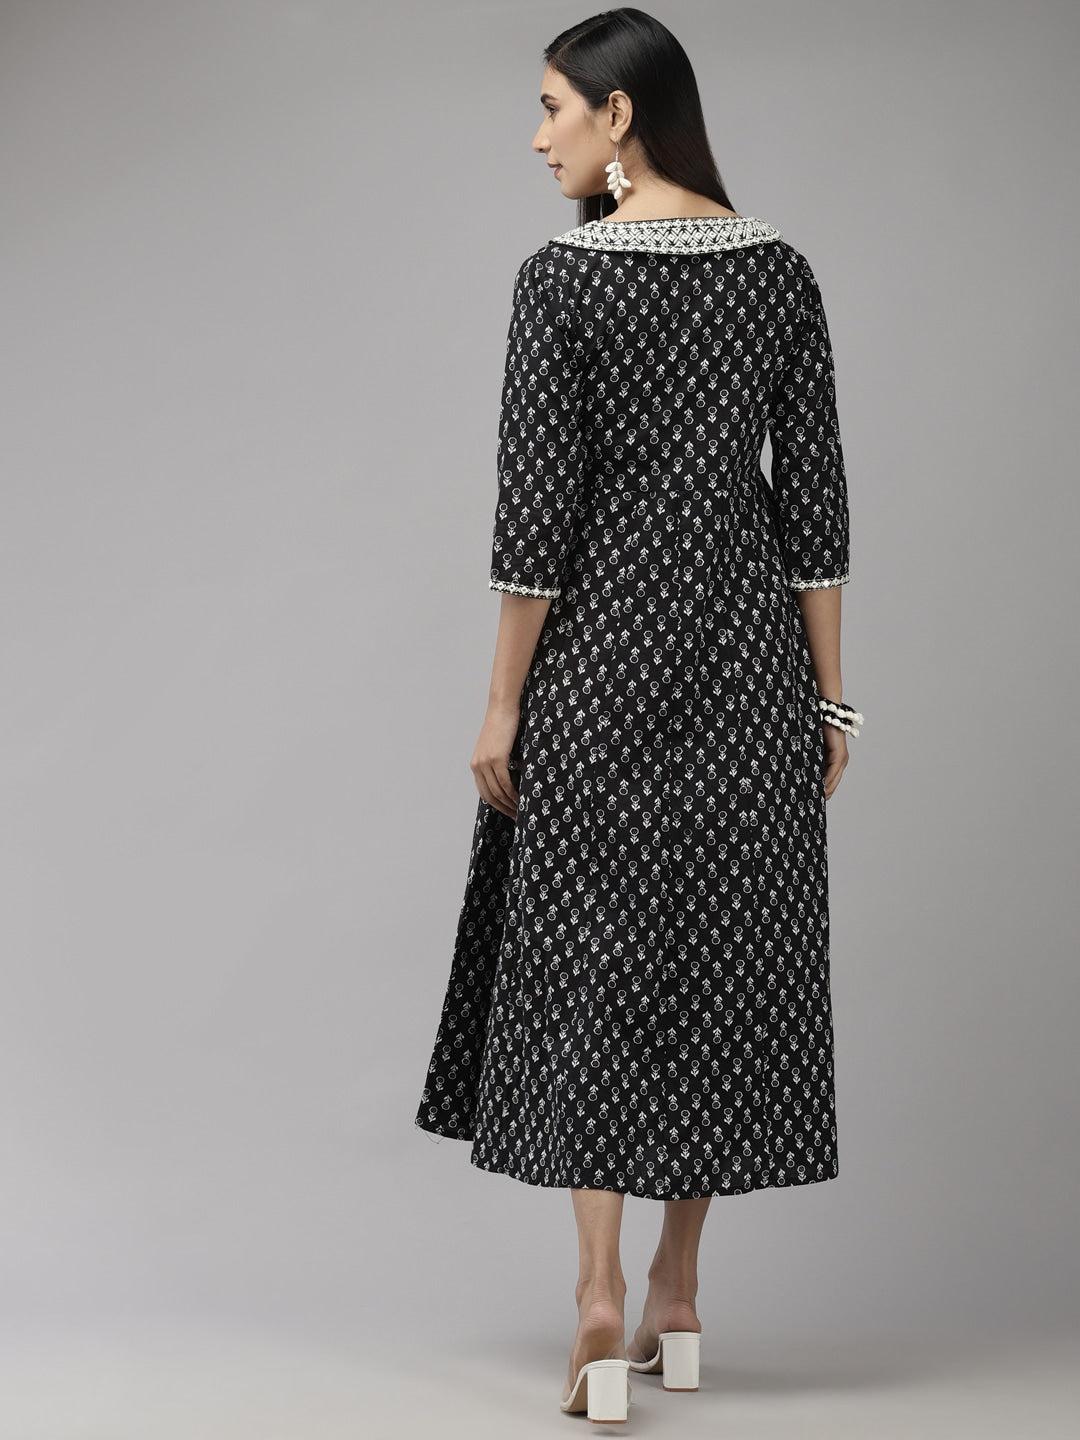 black-white-floral-printed-dress-10104027BK, Women Clothing, Cotton Dress